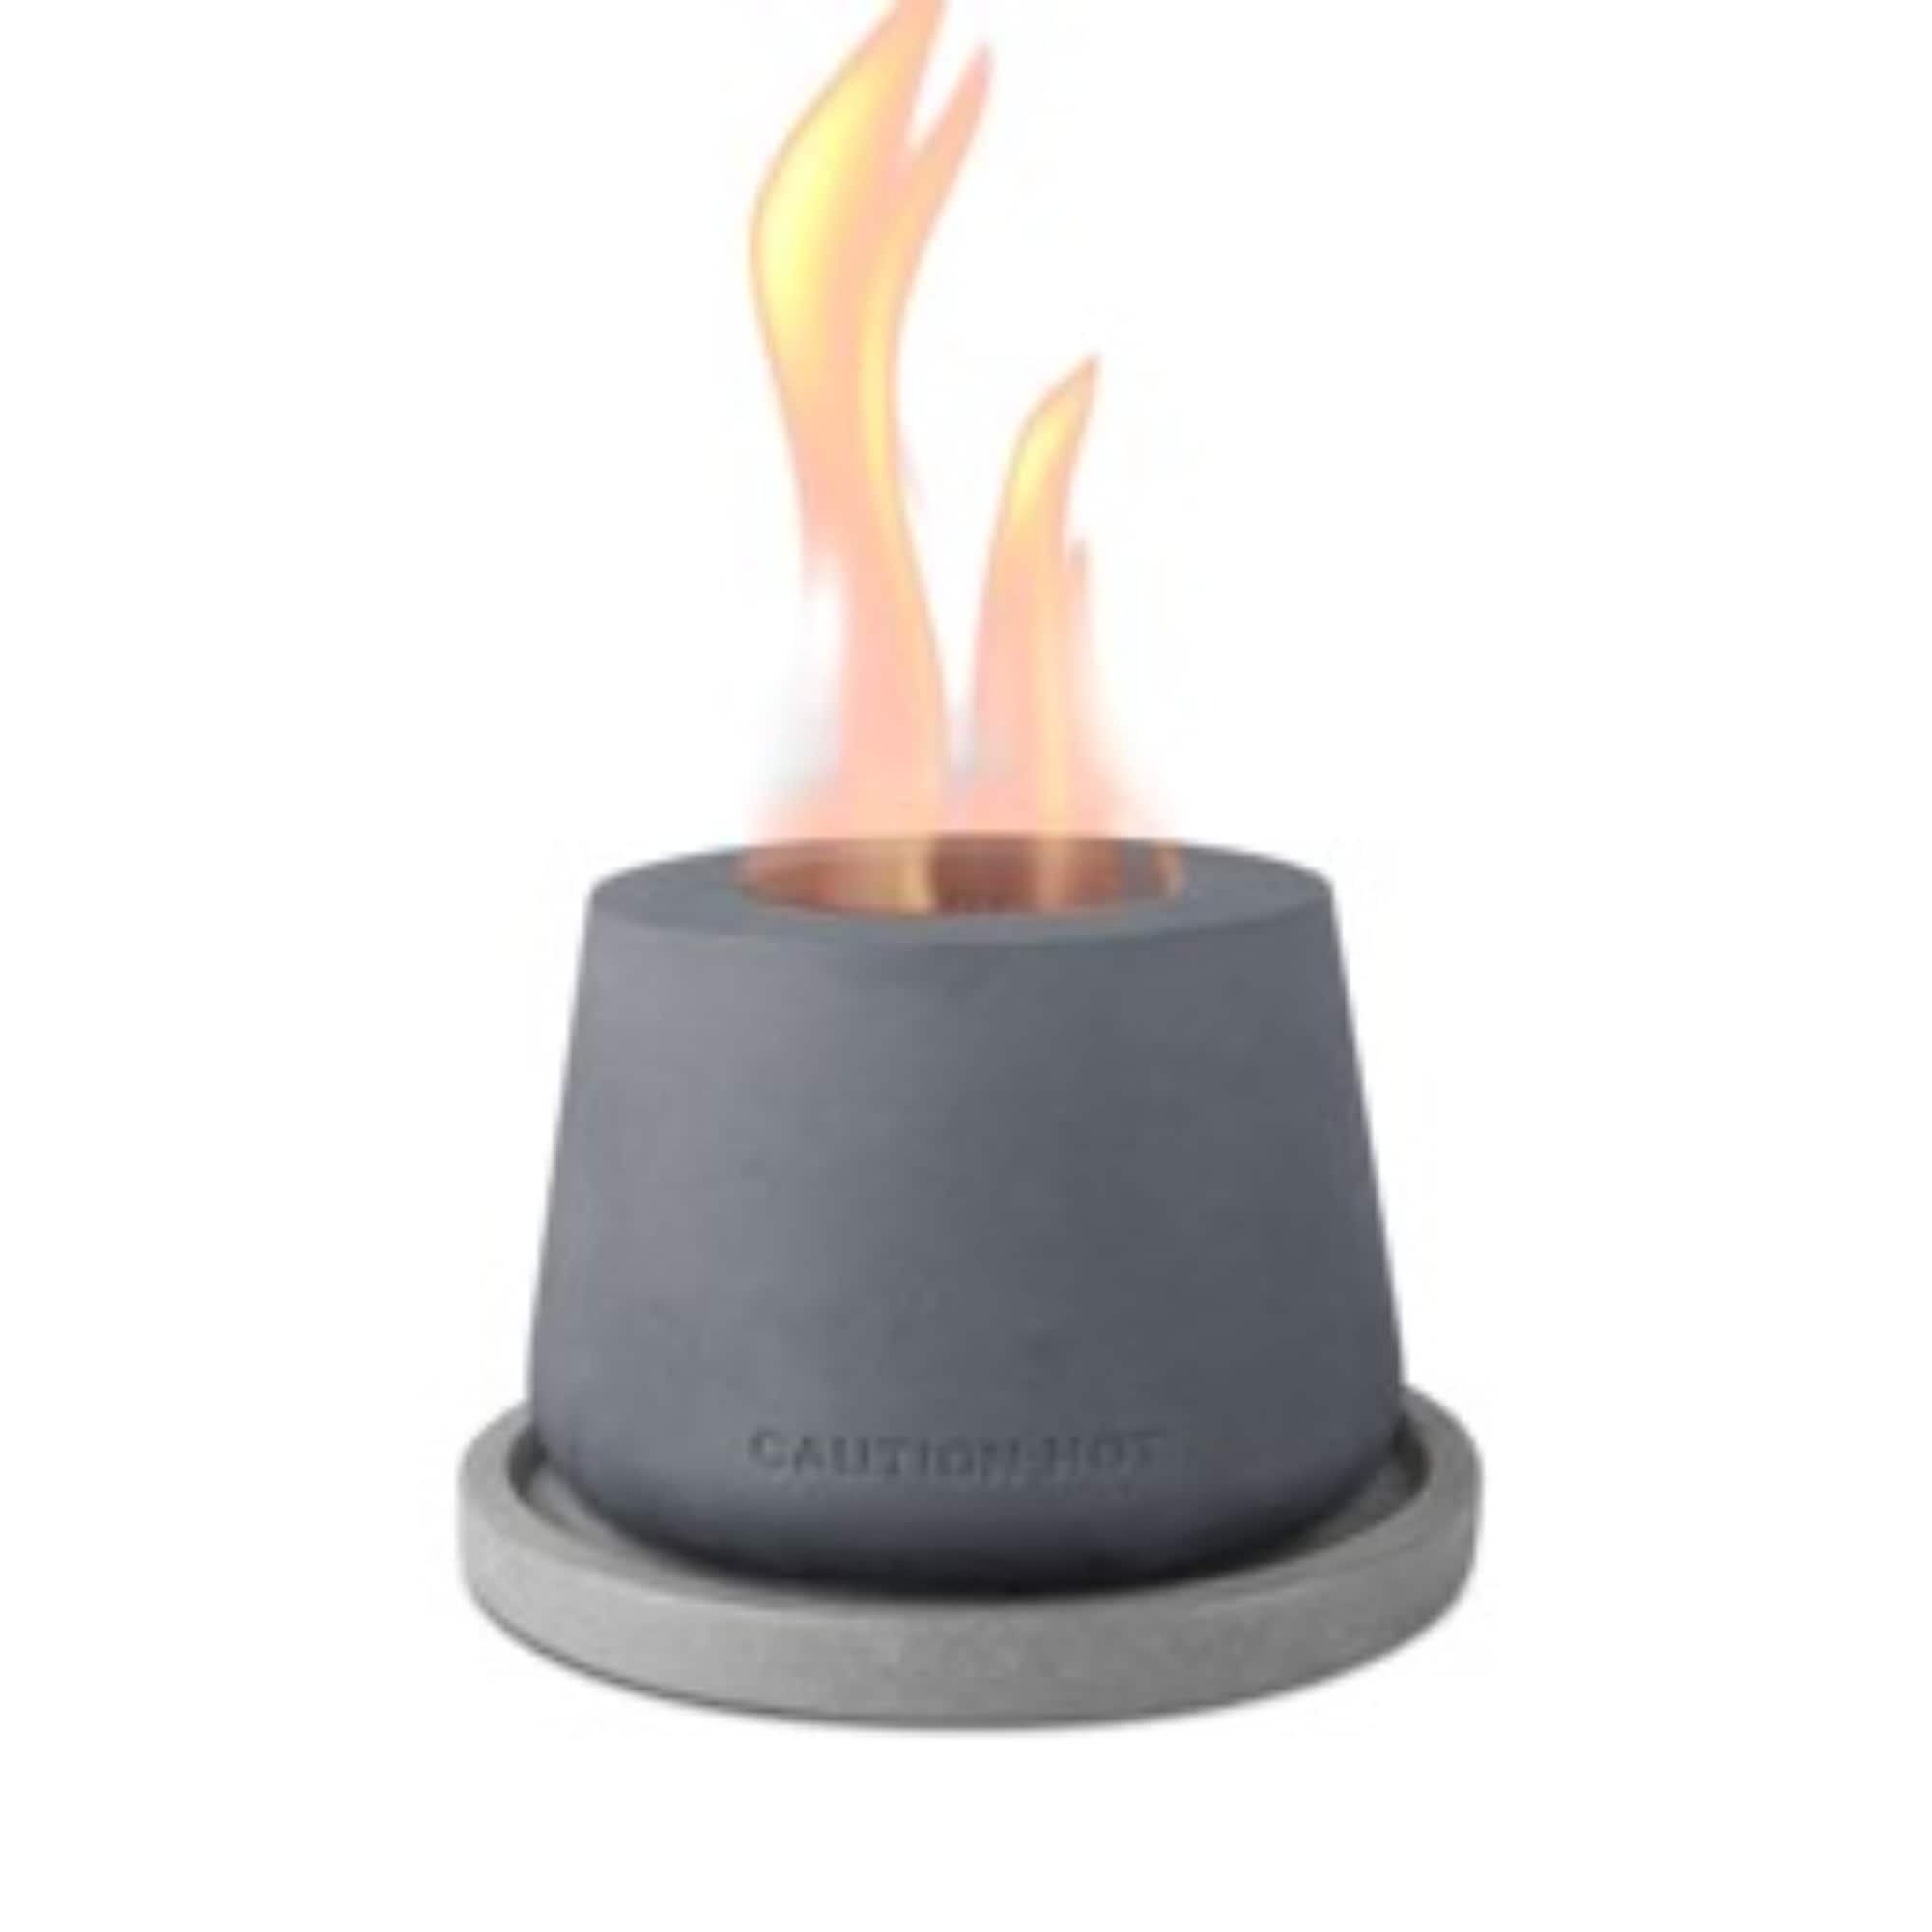 Fireflame Tabletop Fire Pit Bowl - Portable Concrete Mini Personal